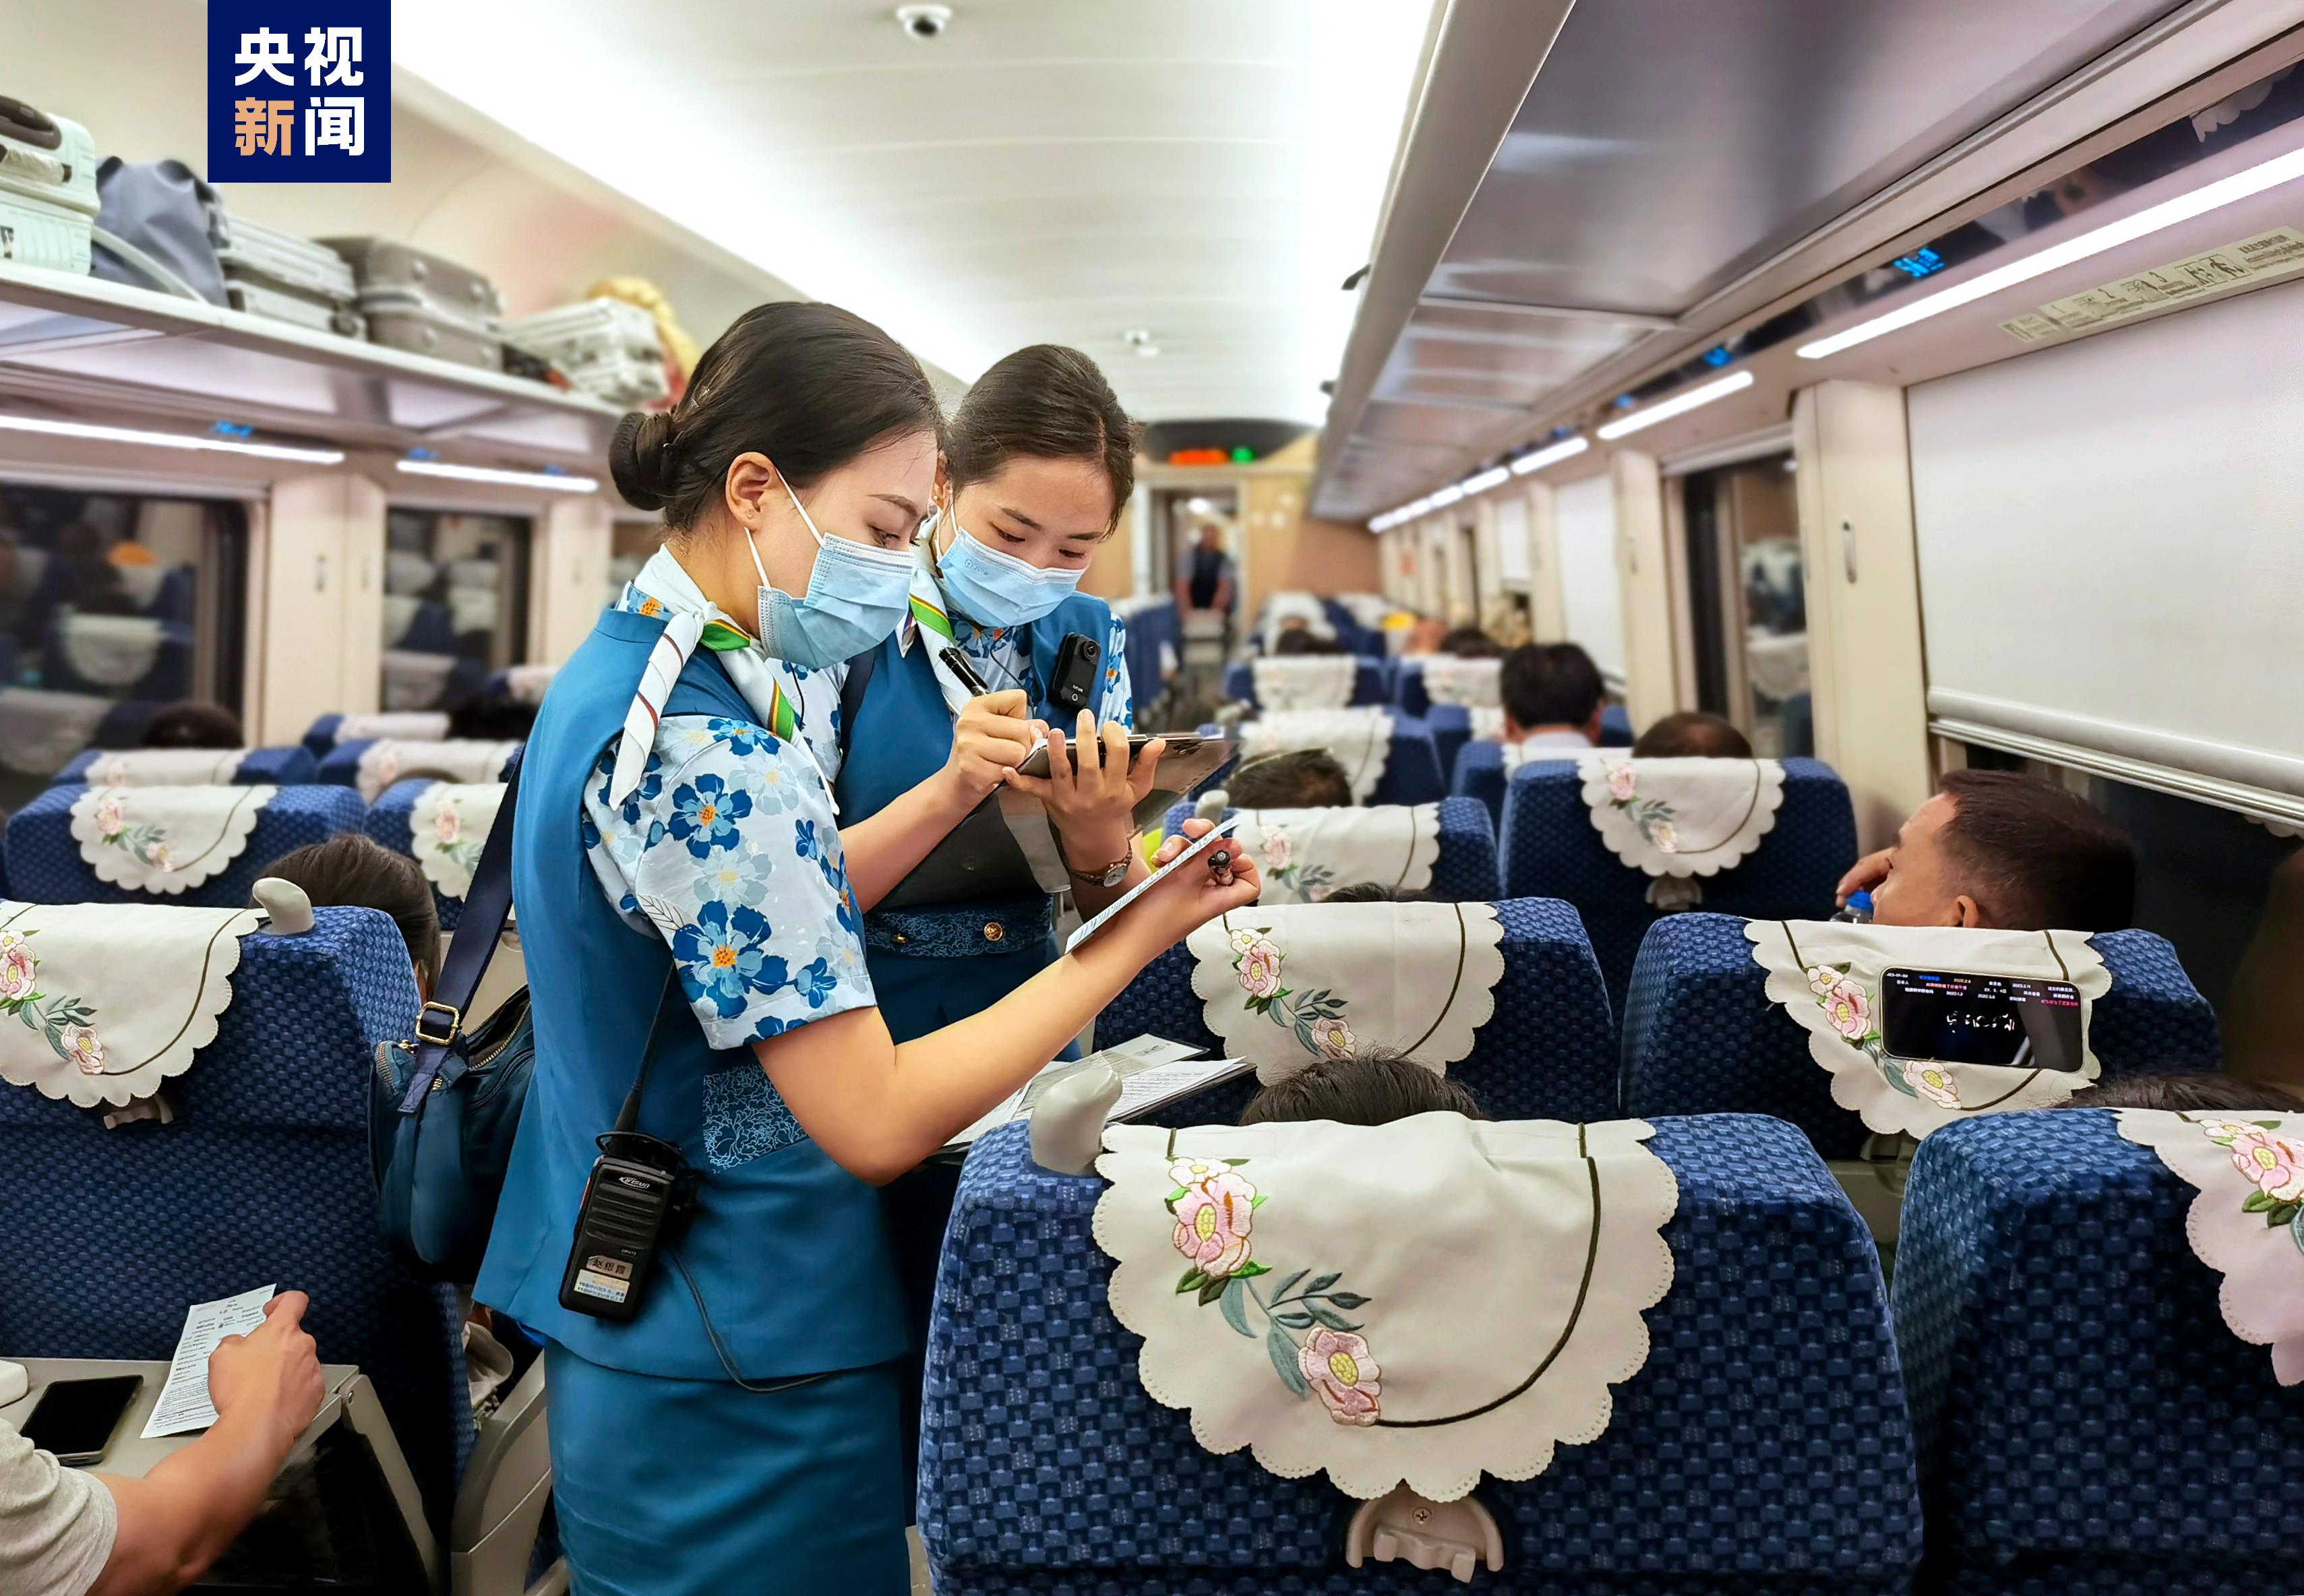 Staff members serve passengers on a train. /China Media Group